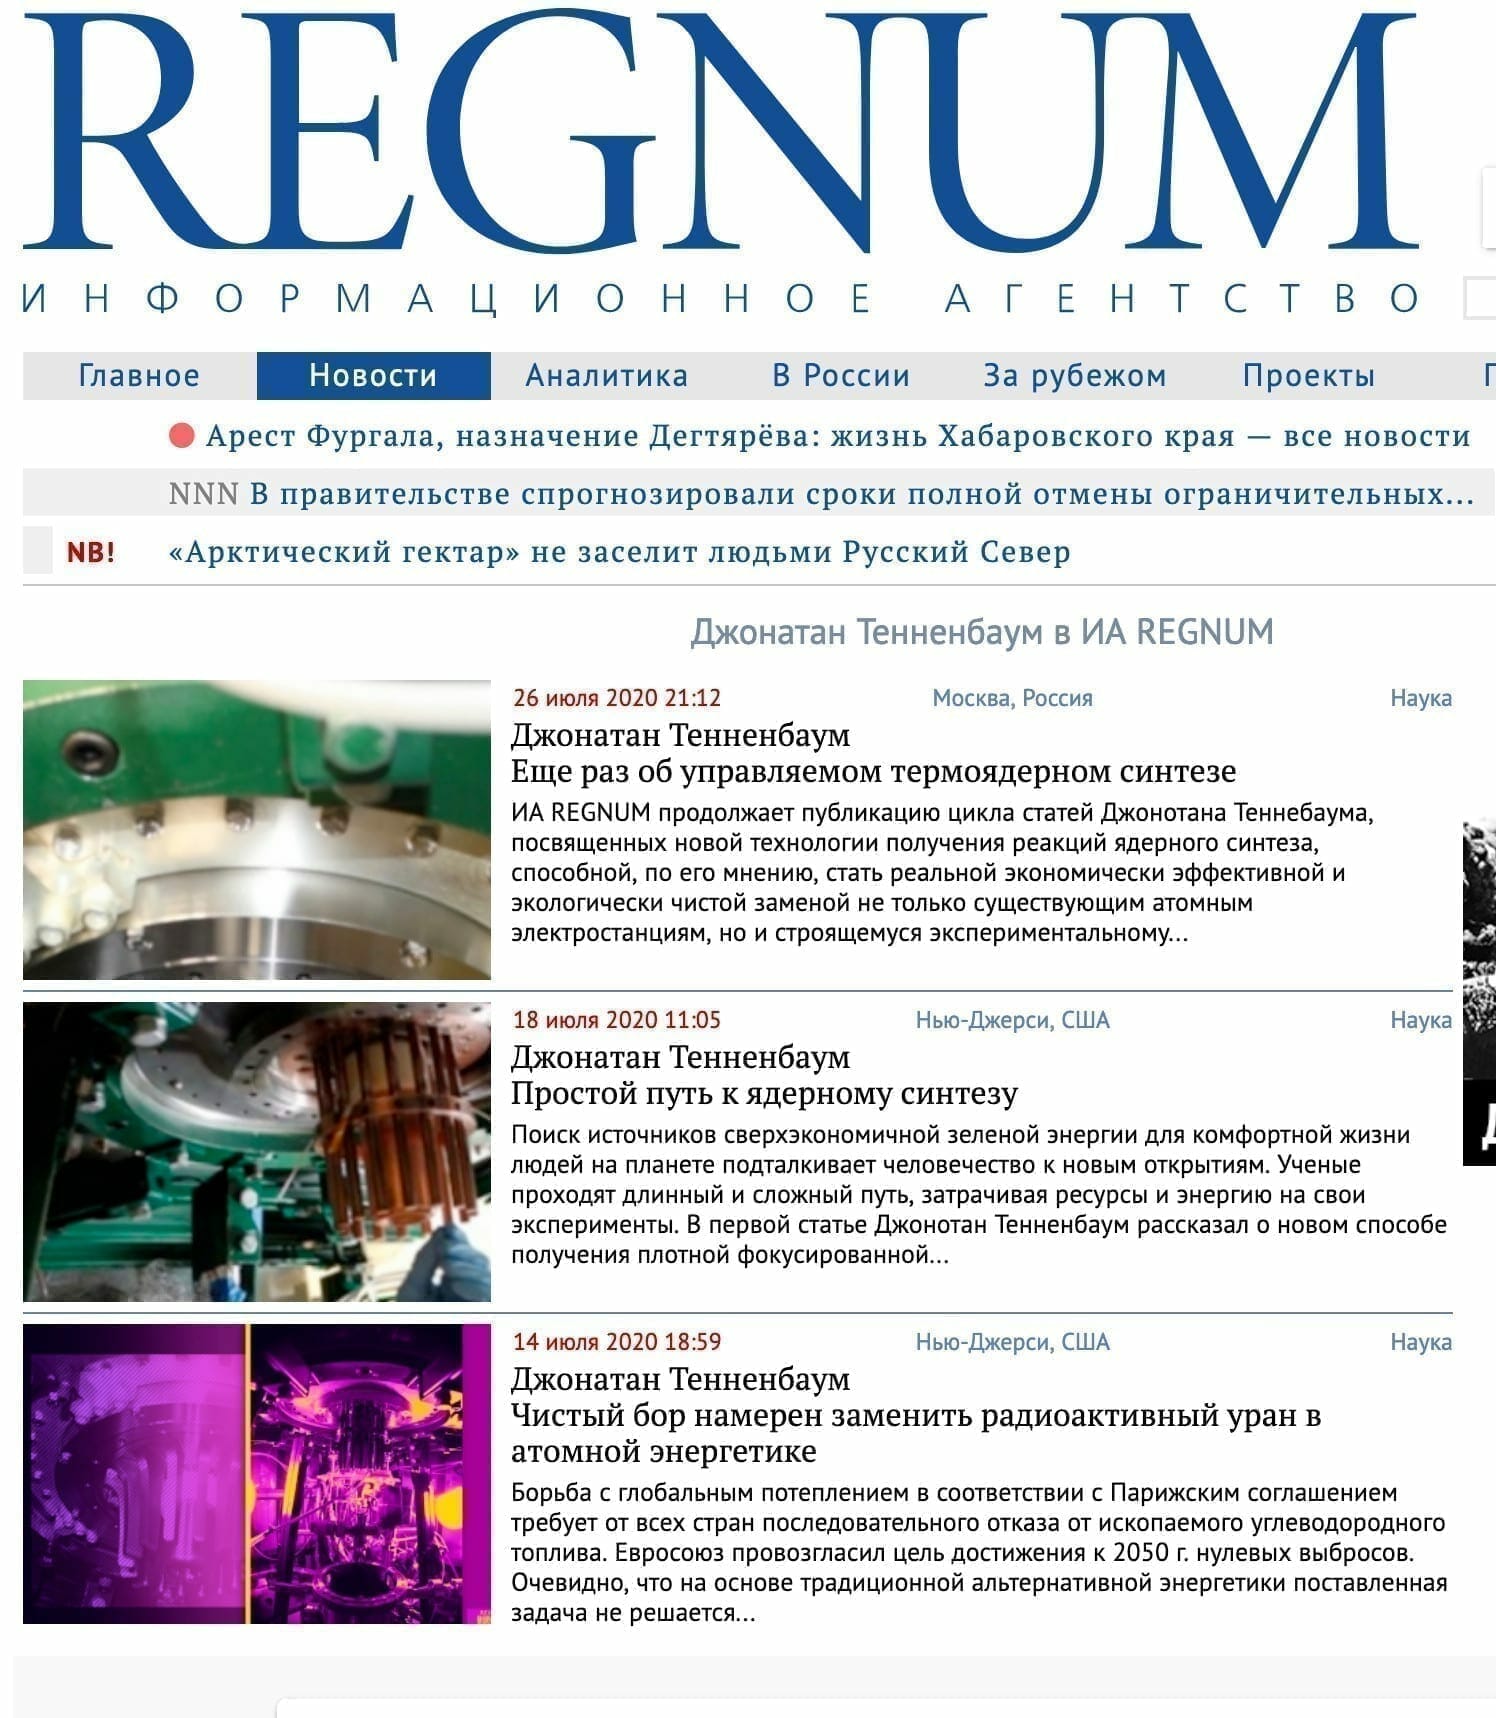 Regnum articles | lpp fusion